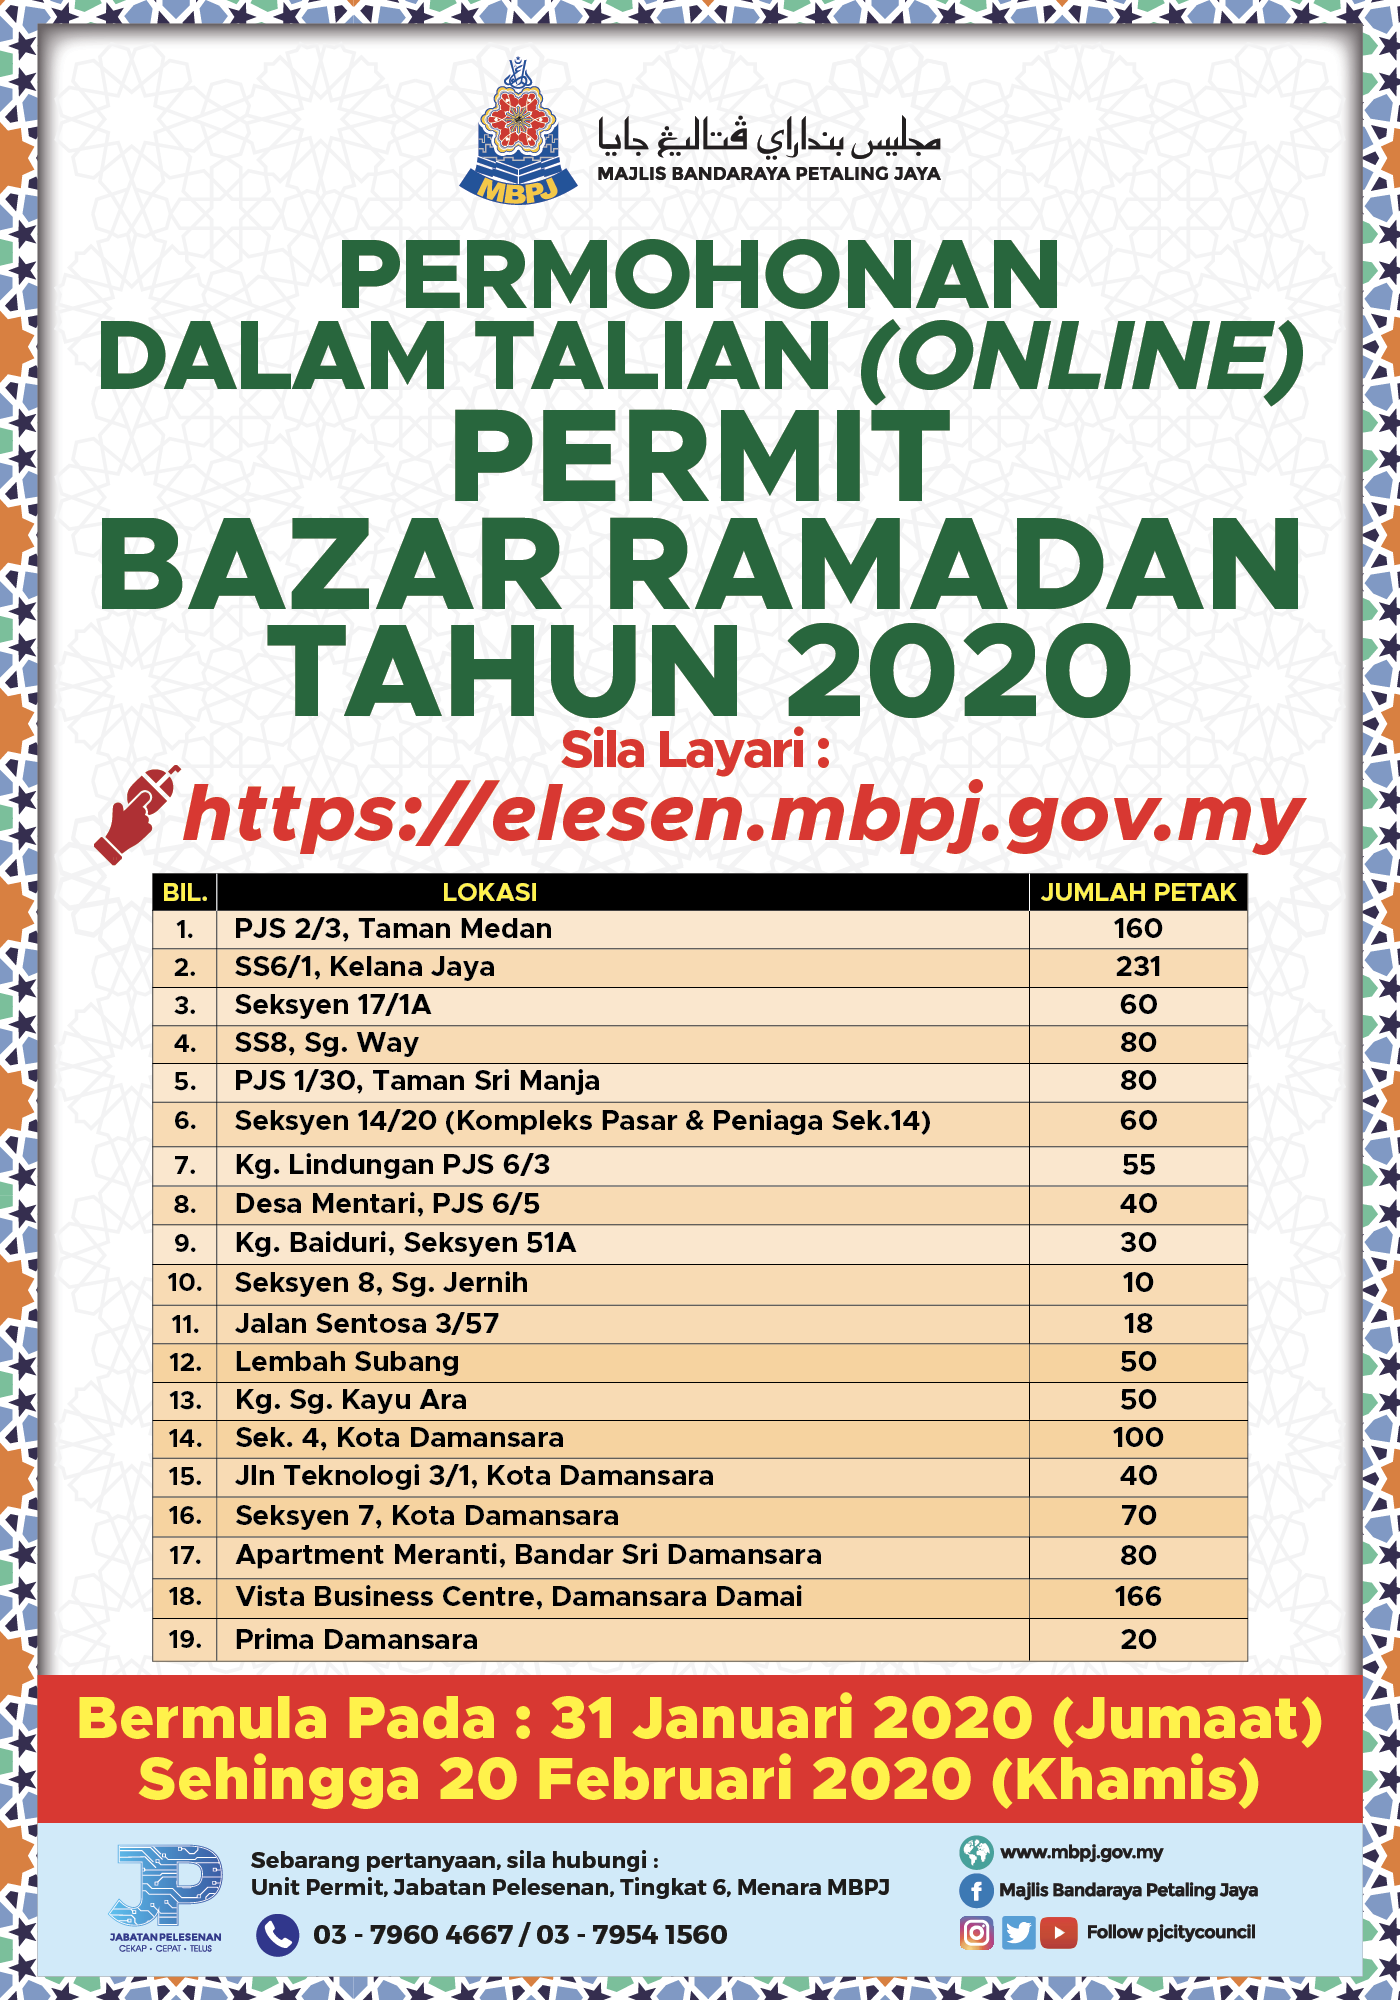 Permit Bazaar Ramadan 2020